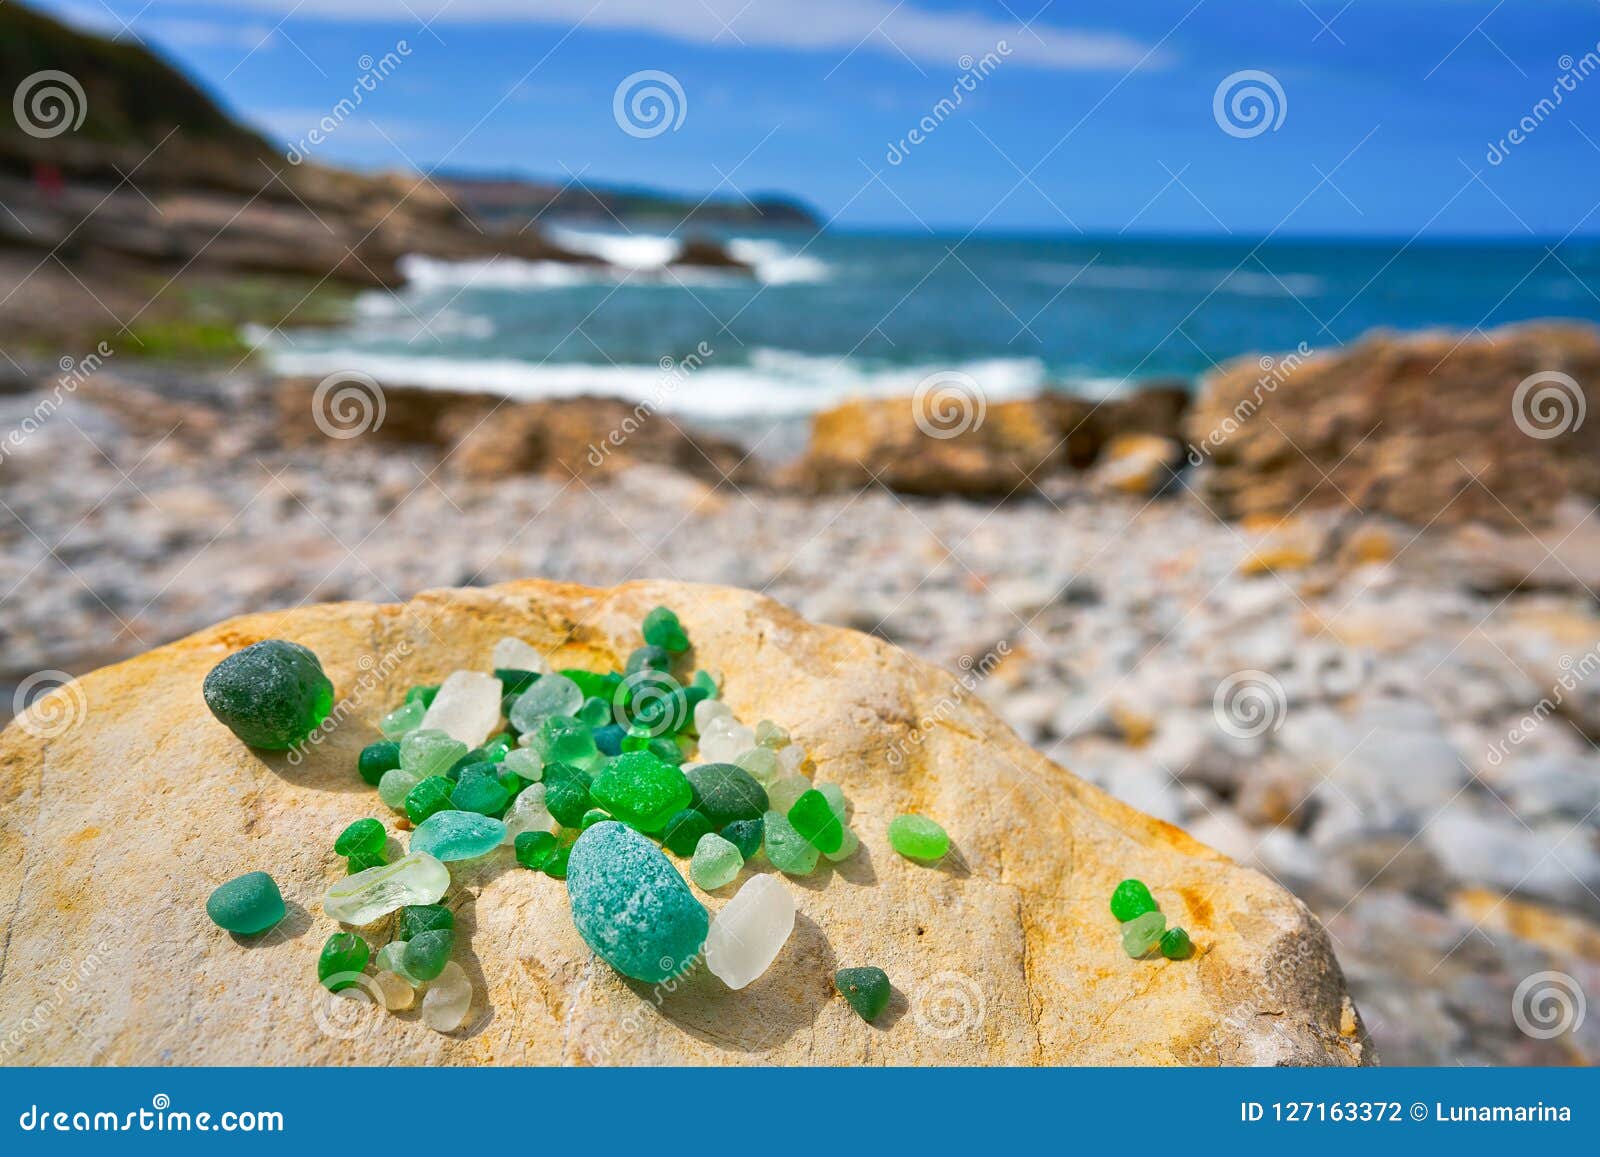 antromero beach of cristales glass stones asturias